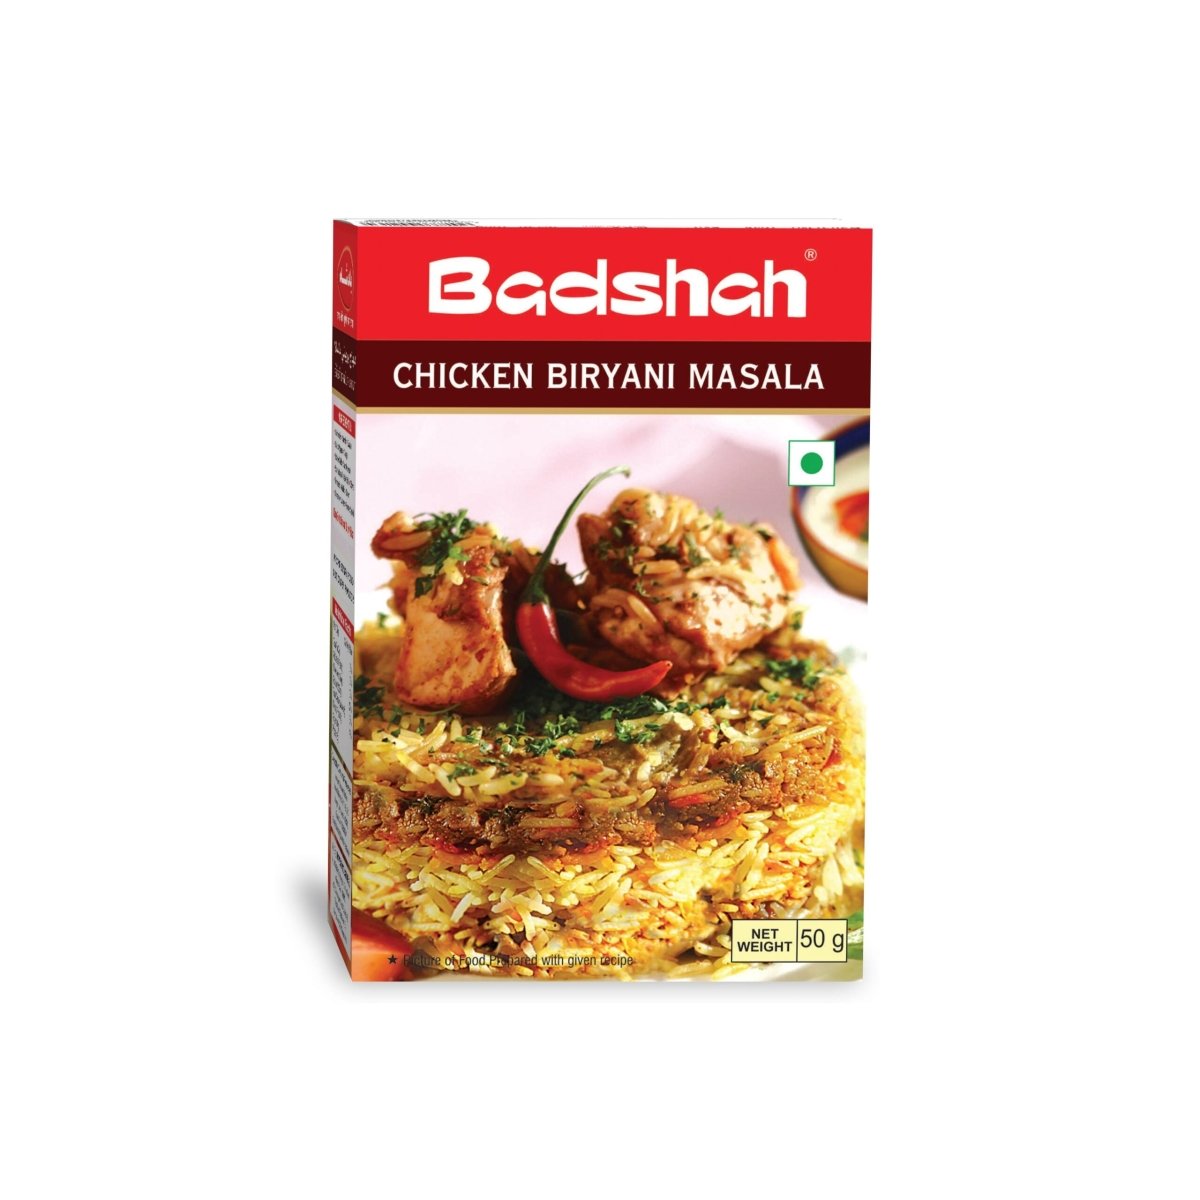 Badshah Chicken Biryani Masala - Tulsidas